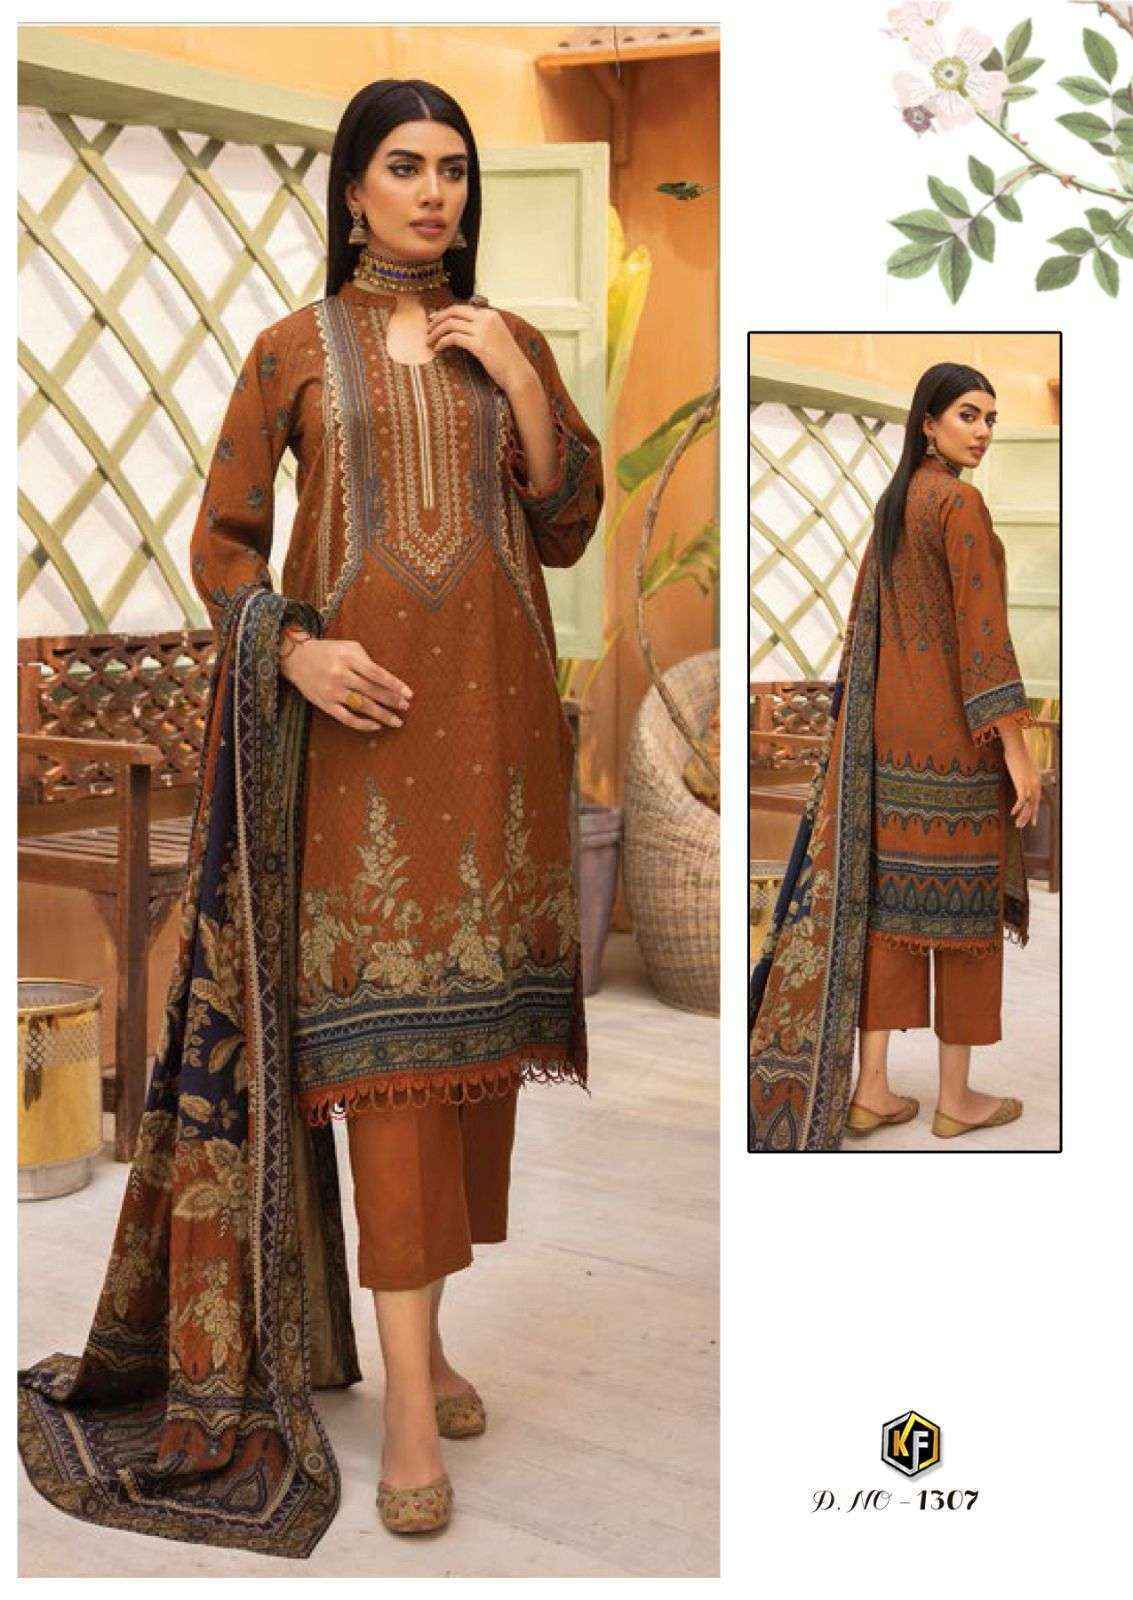 Keval Fab Rangrez Vol 3 Cotton Dress Material 10 pcs Catalogue